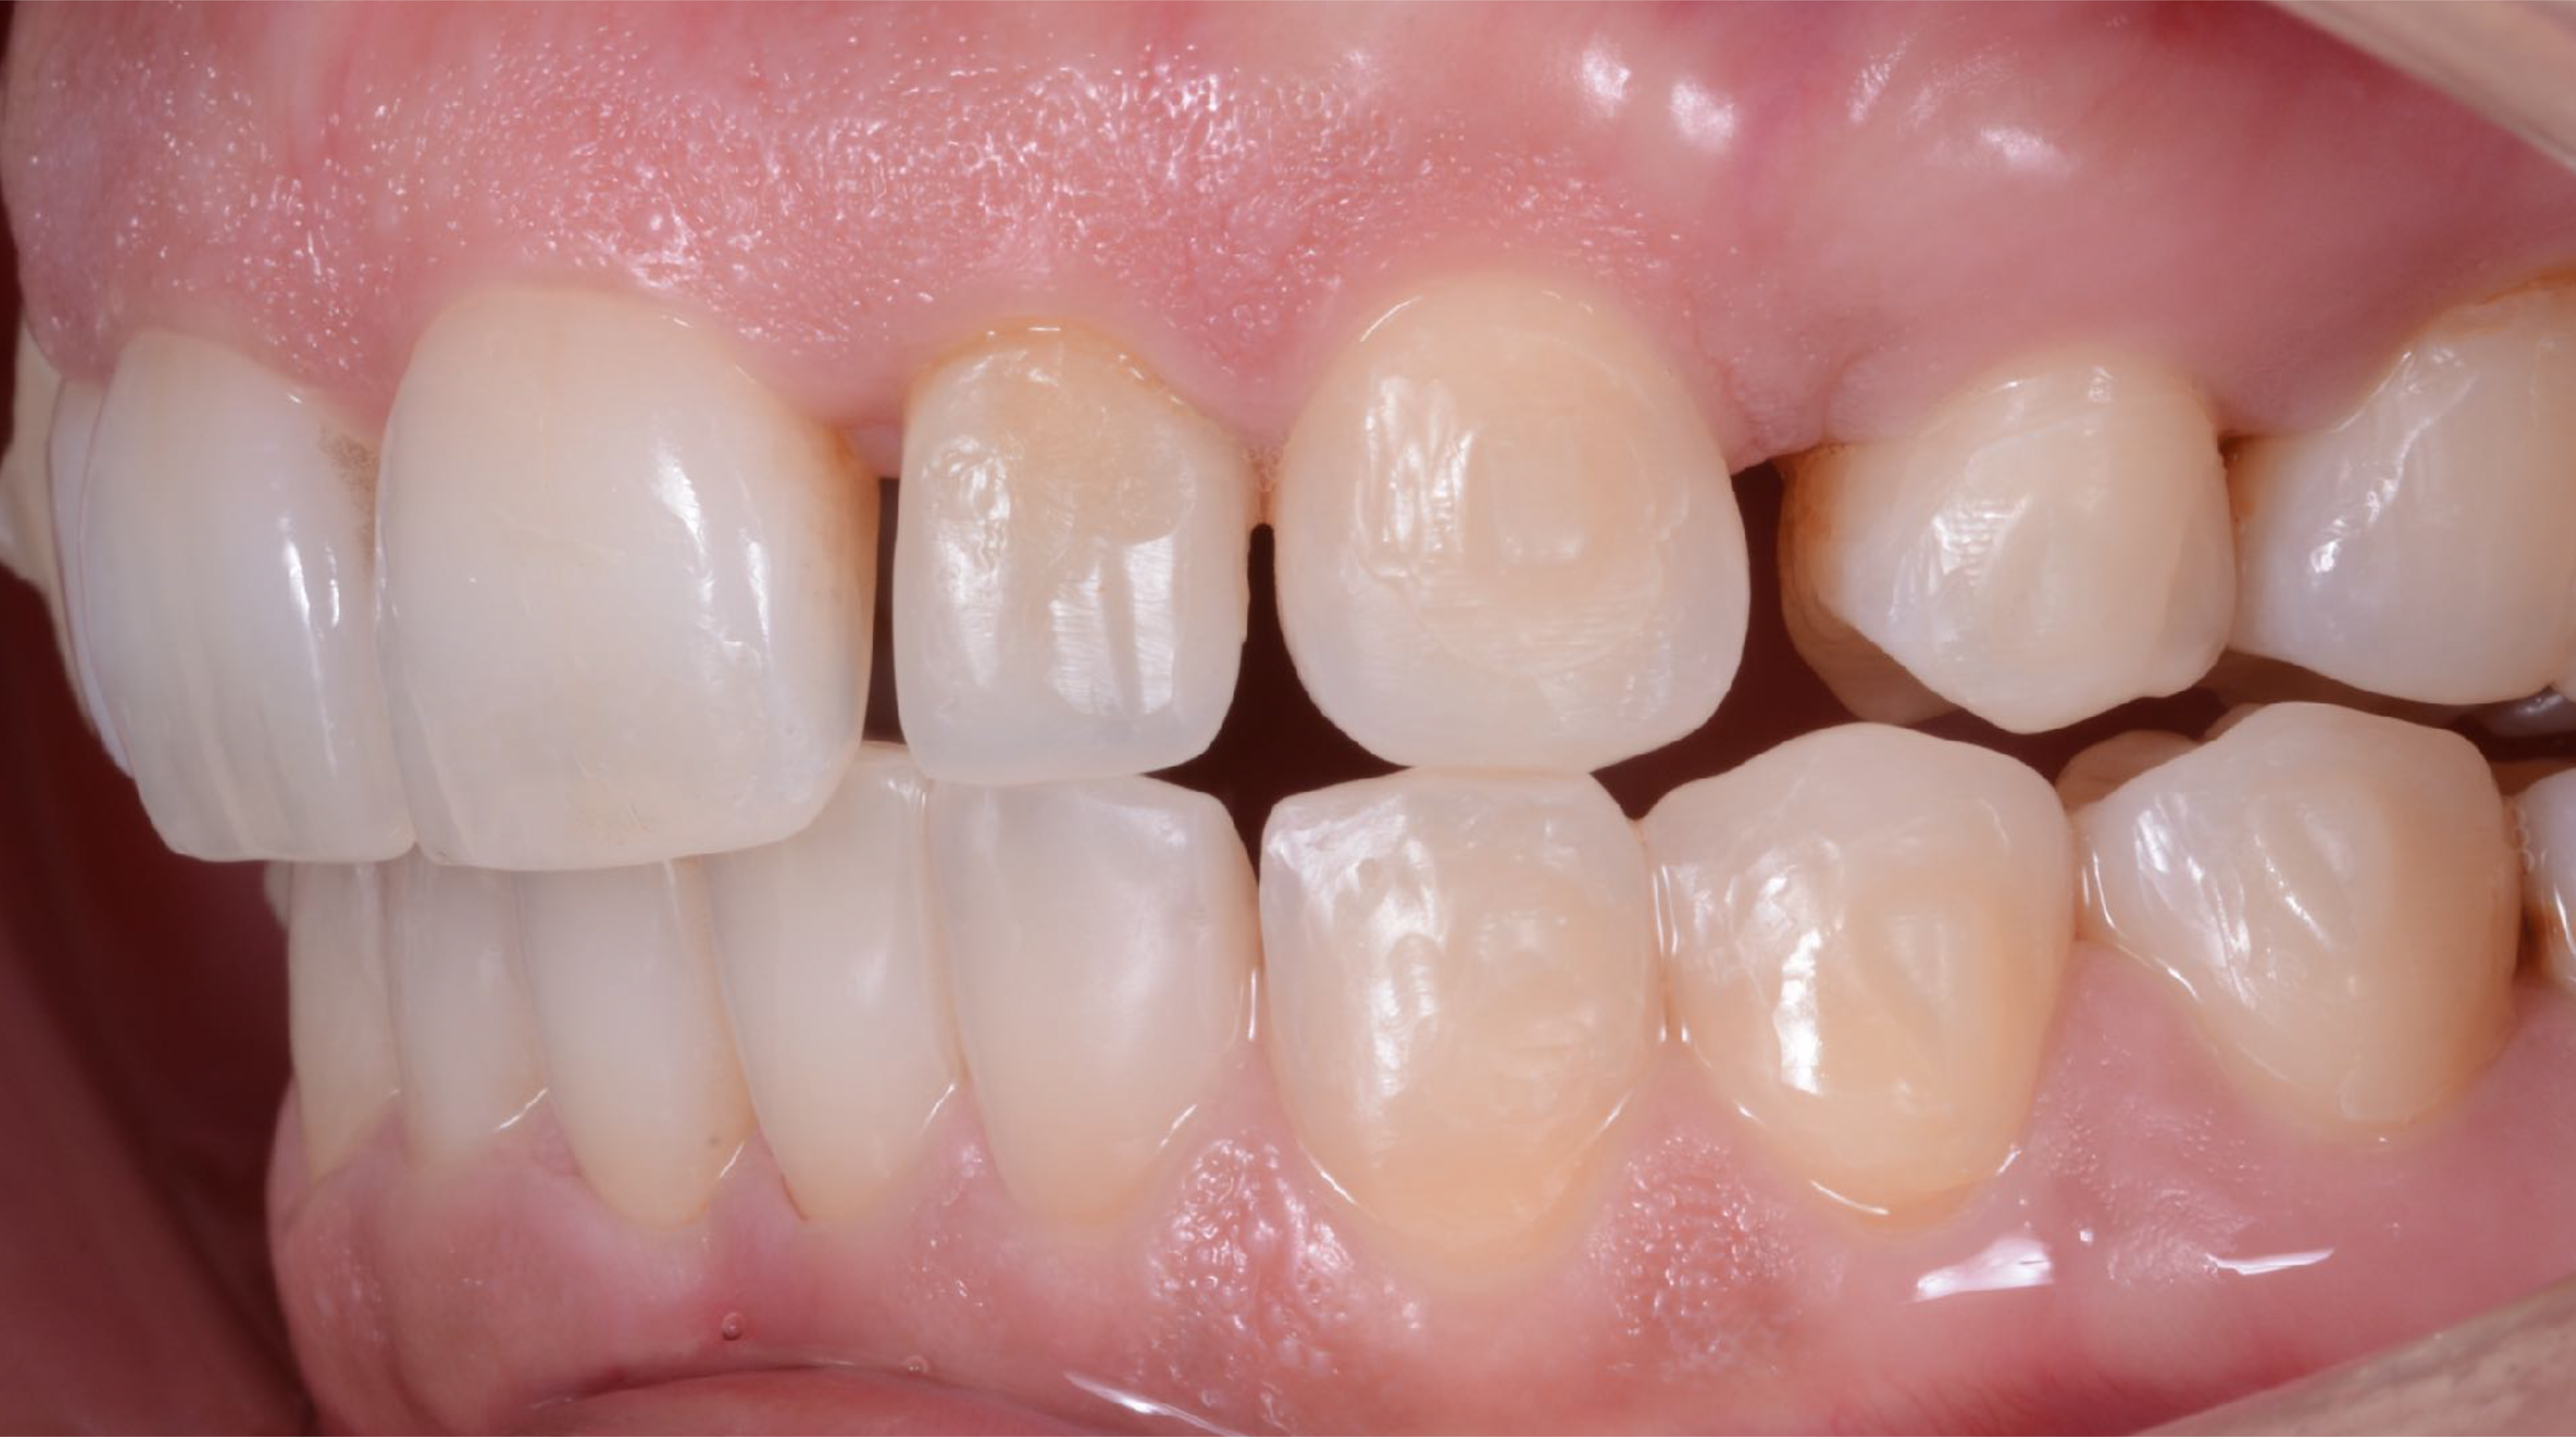 Fig. 3: Large gaps between the teeth caused by poor orthodontic planning.